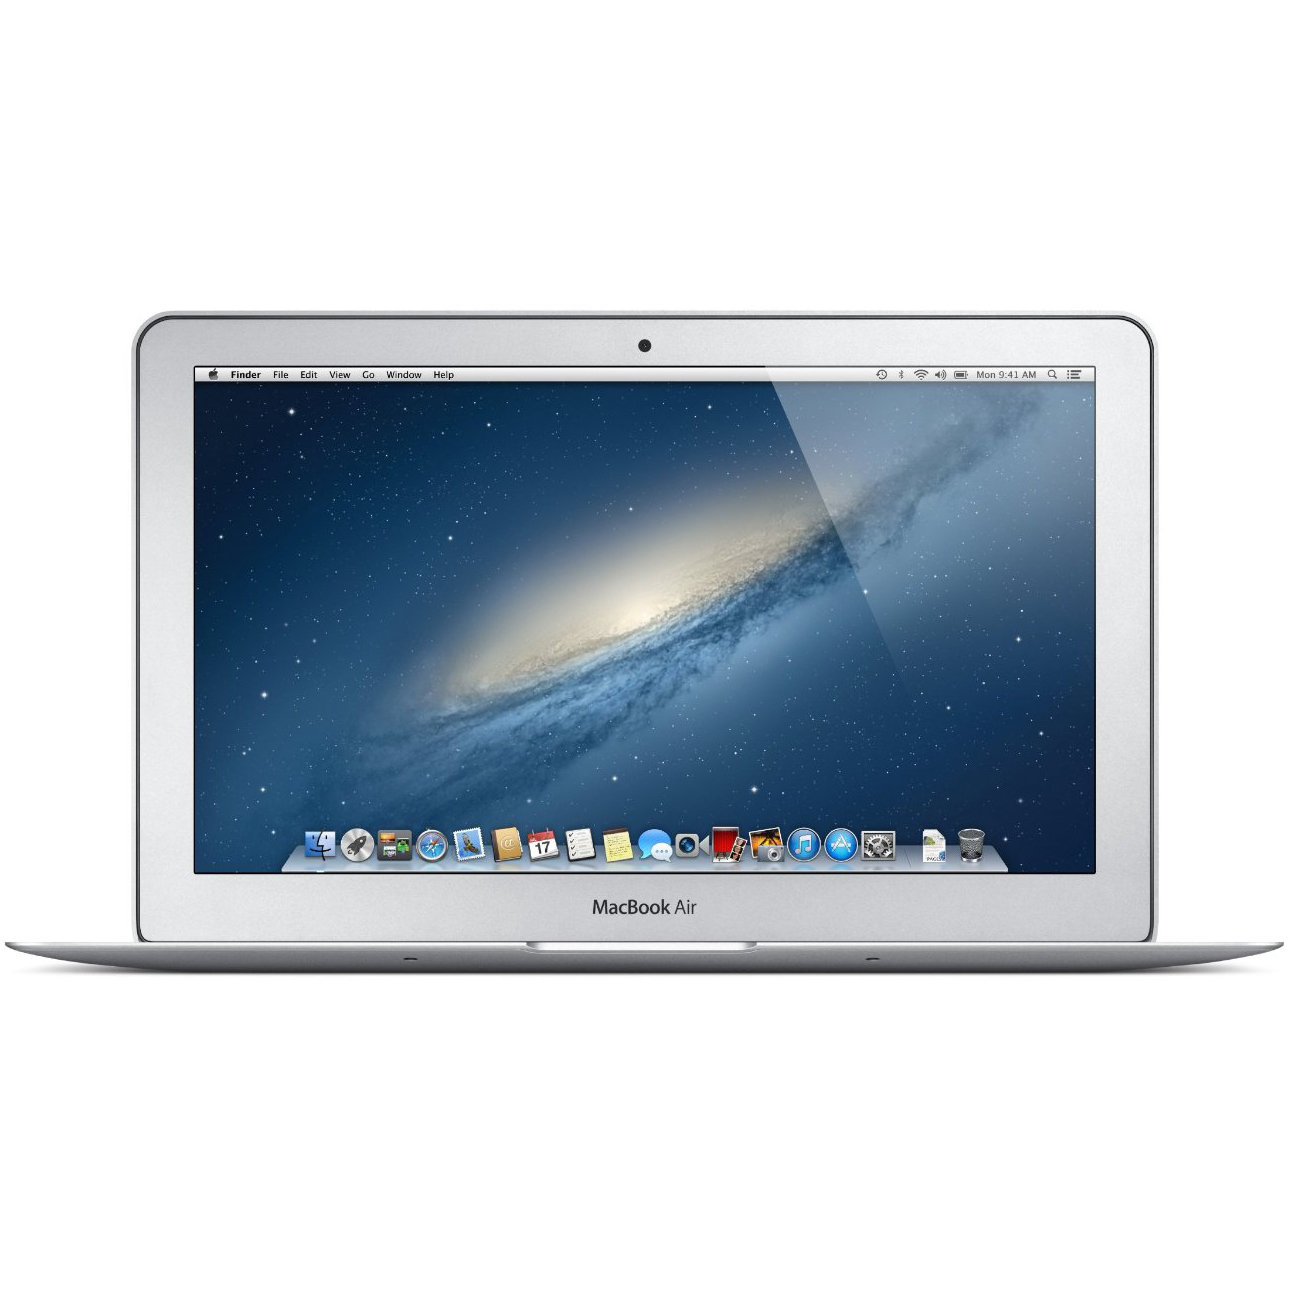  Laptop Apple MacBook Air, Intel Core i5 Haswell, SSD 256GB, 4 GB DDR3, Intel HD Graphics, Mac OS X 